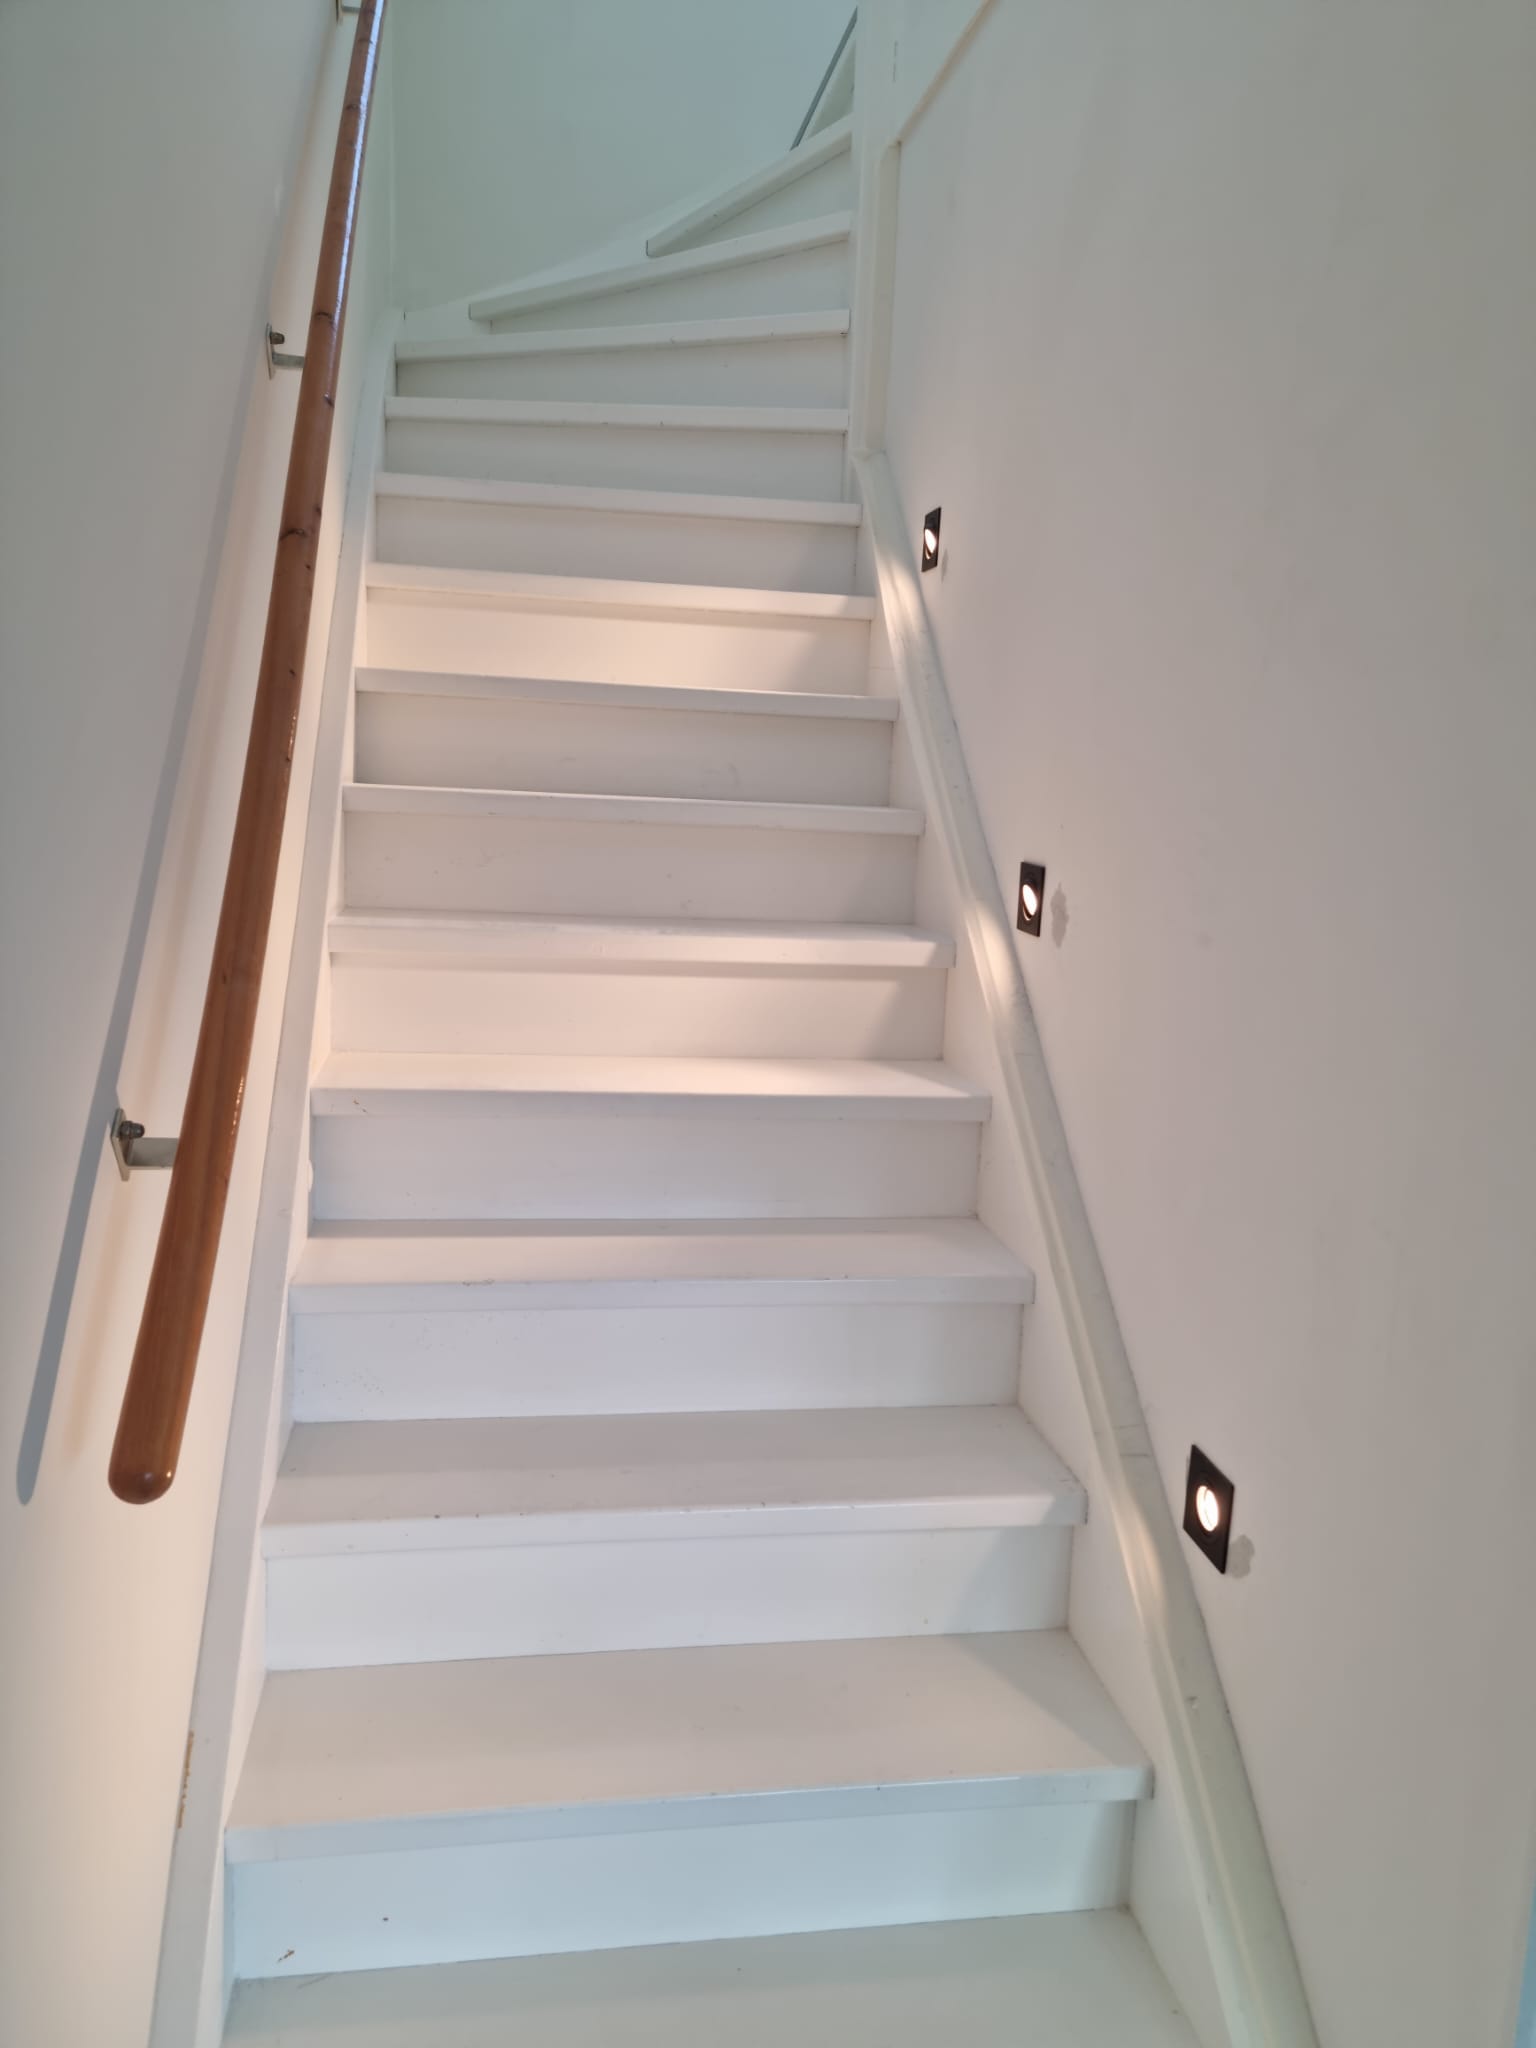 Staircase spotlights